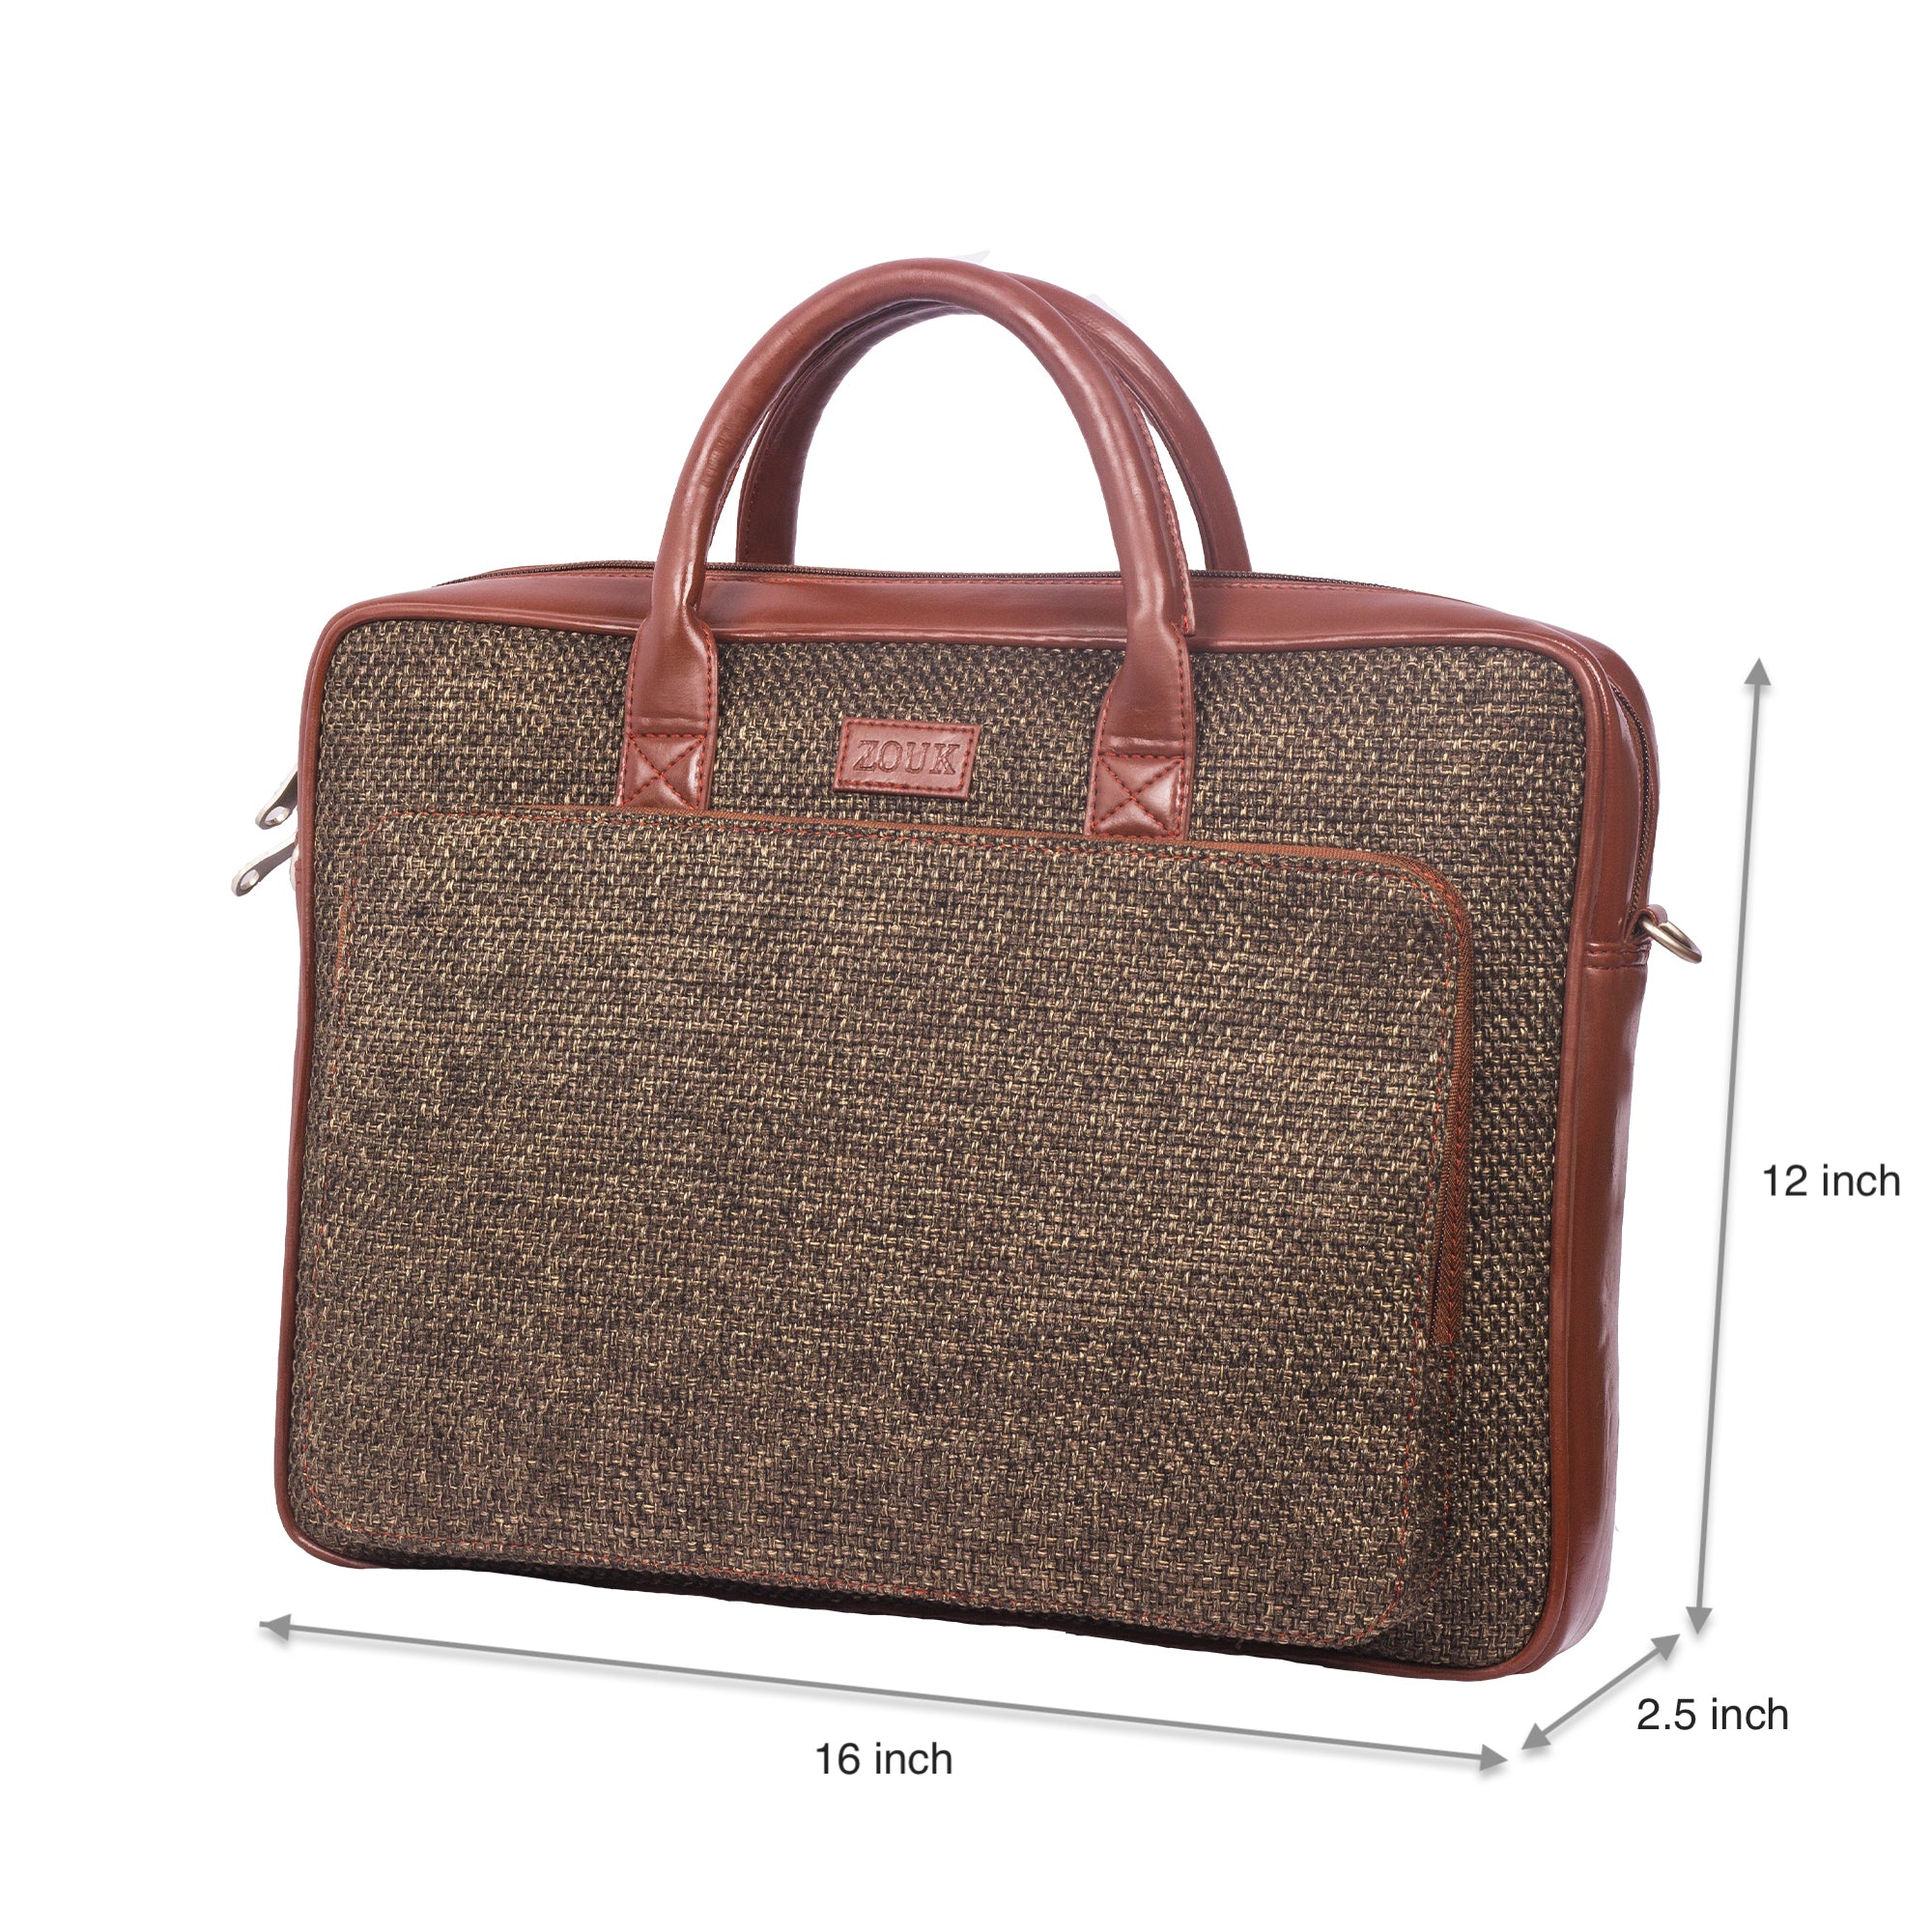 Bristel Laptop Bag with dimensions